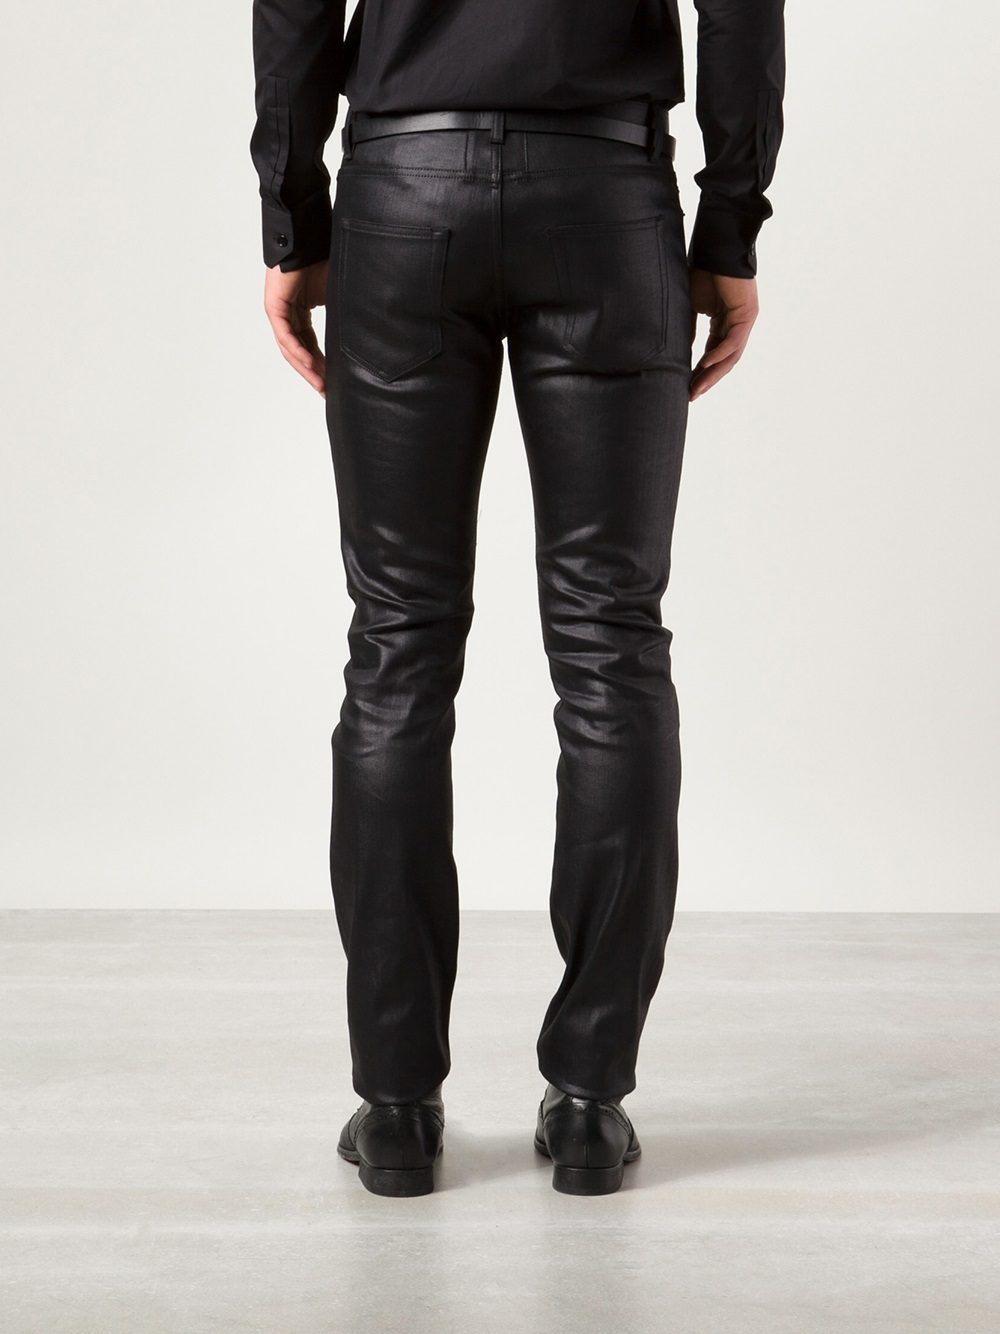 Saint Laurent Wax Denim Jeans in Black for Men